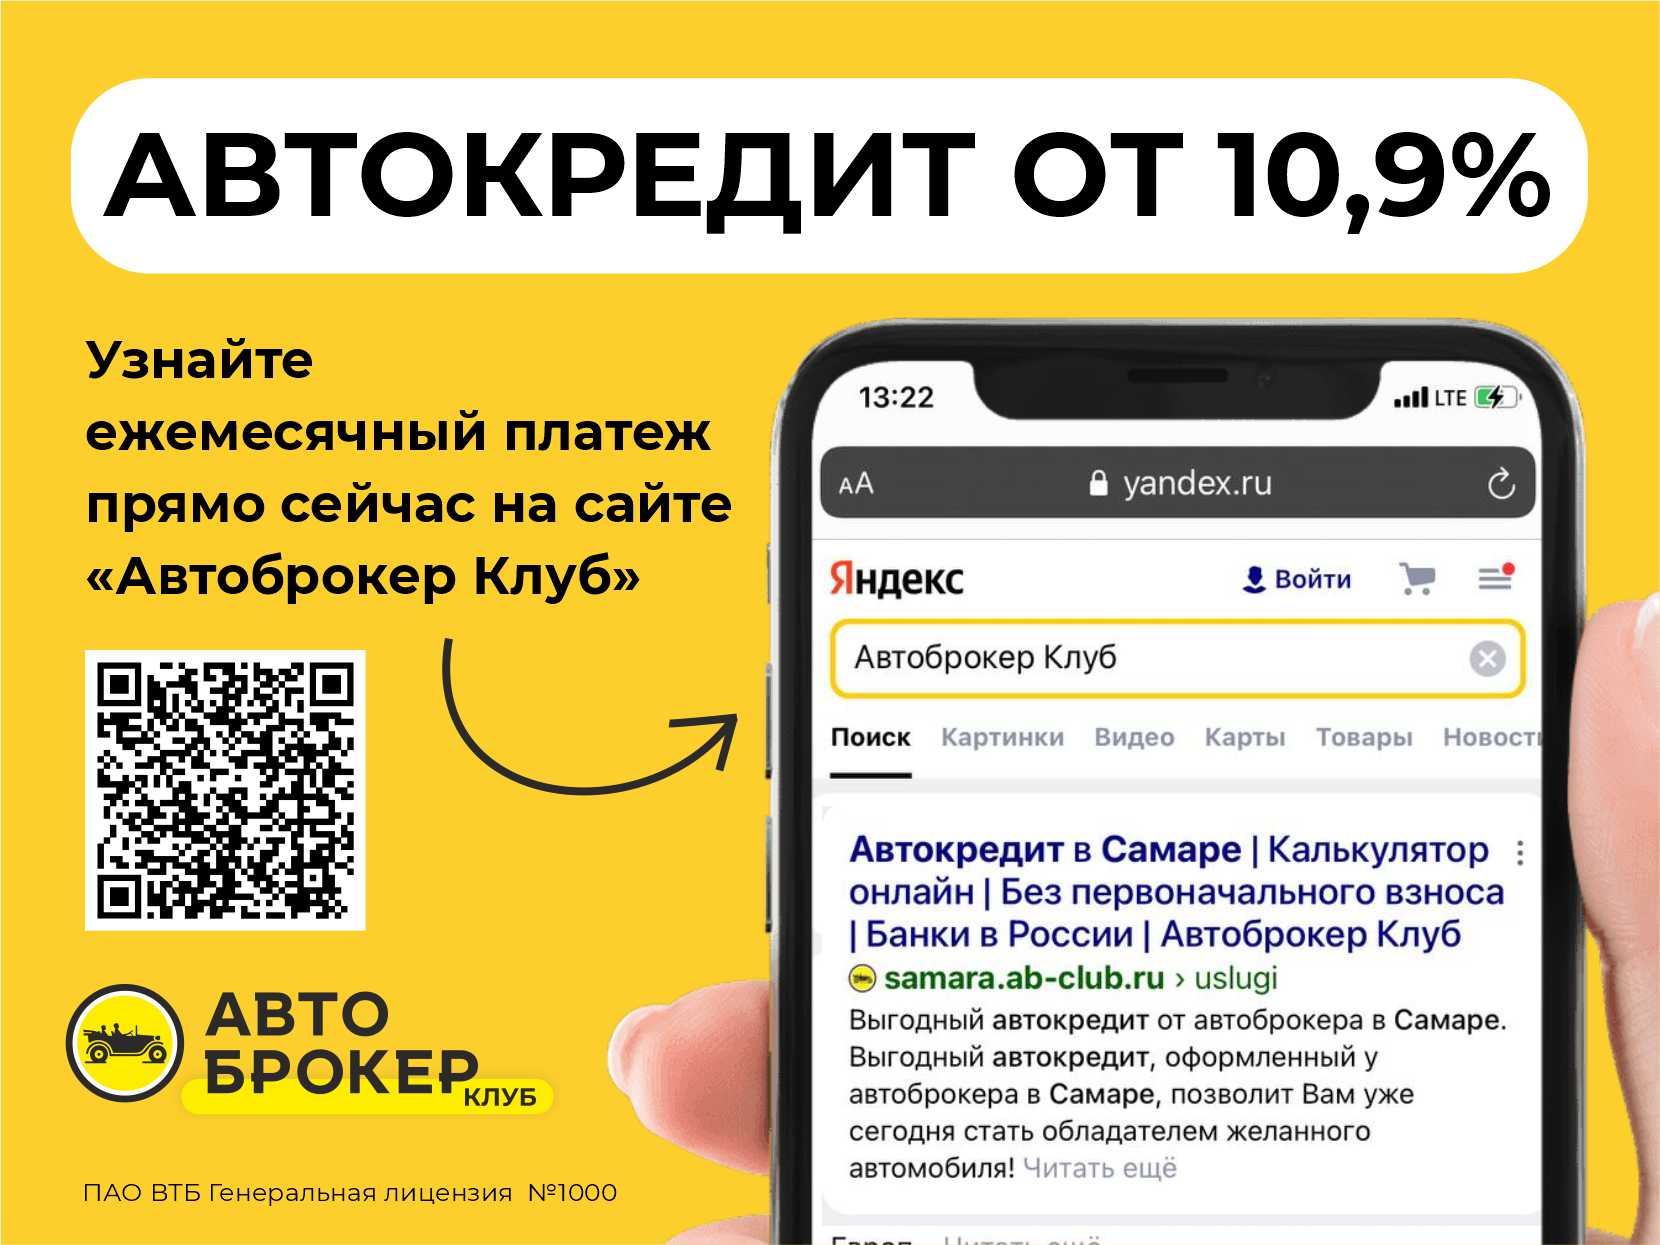 Купить б/у Renault Arkana, 2019 год, 150 л.с. во Владимире